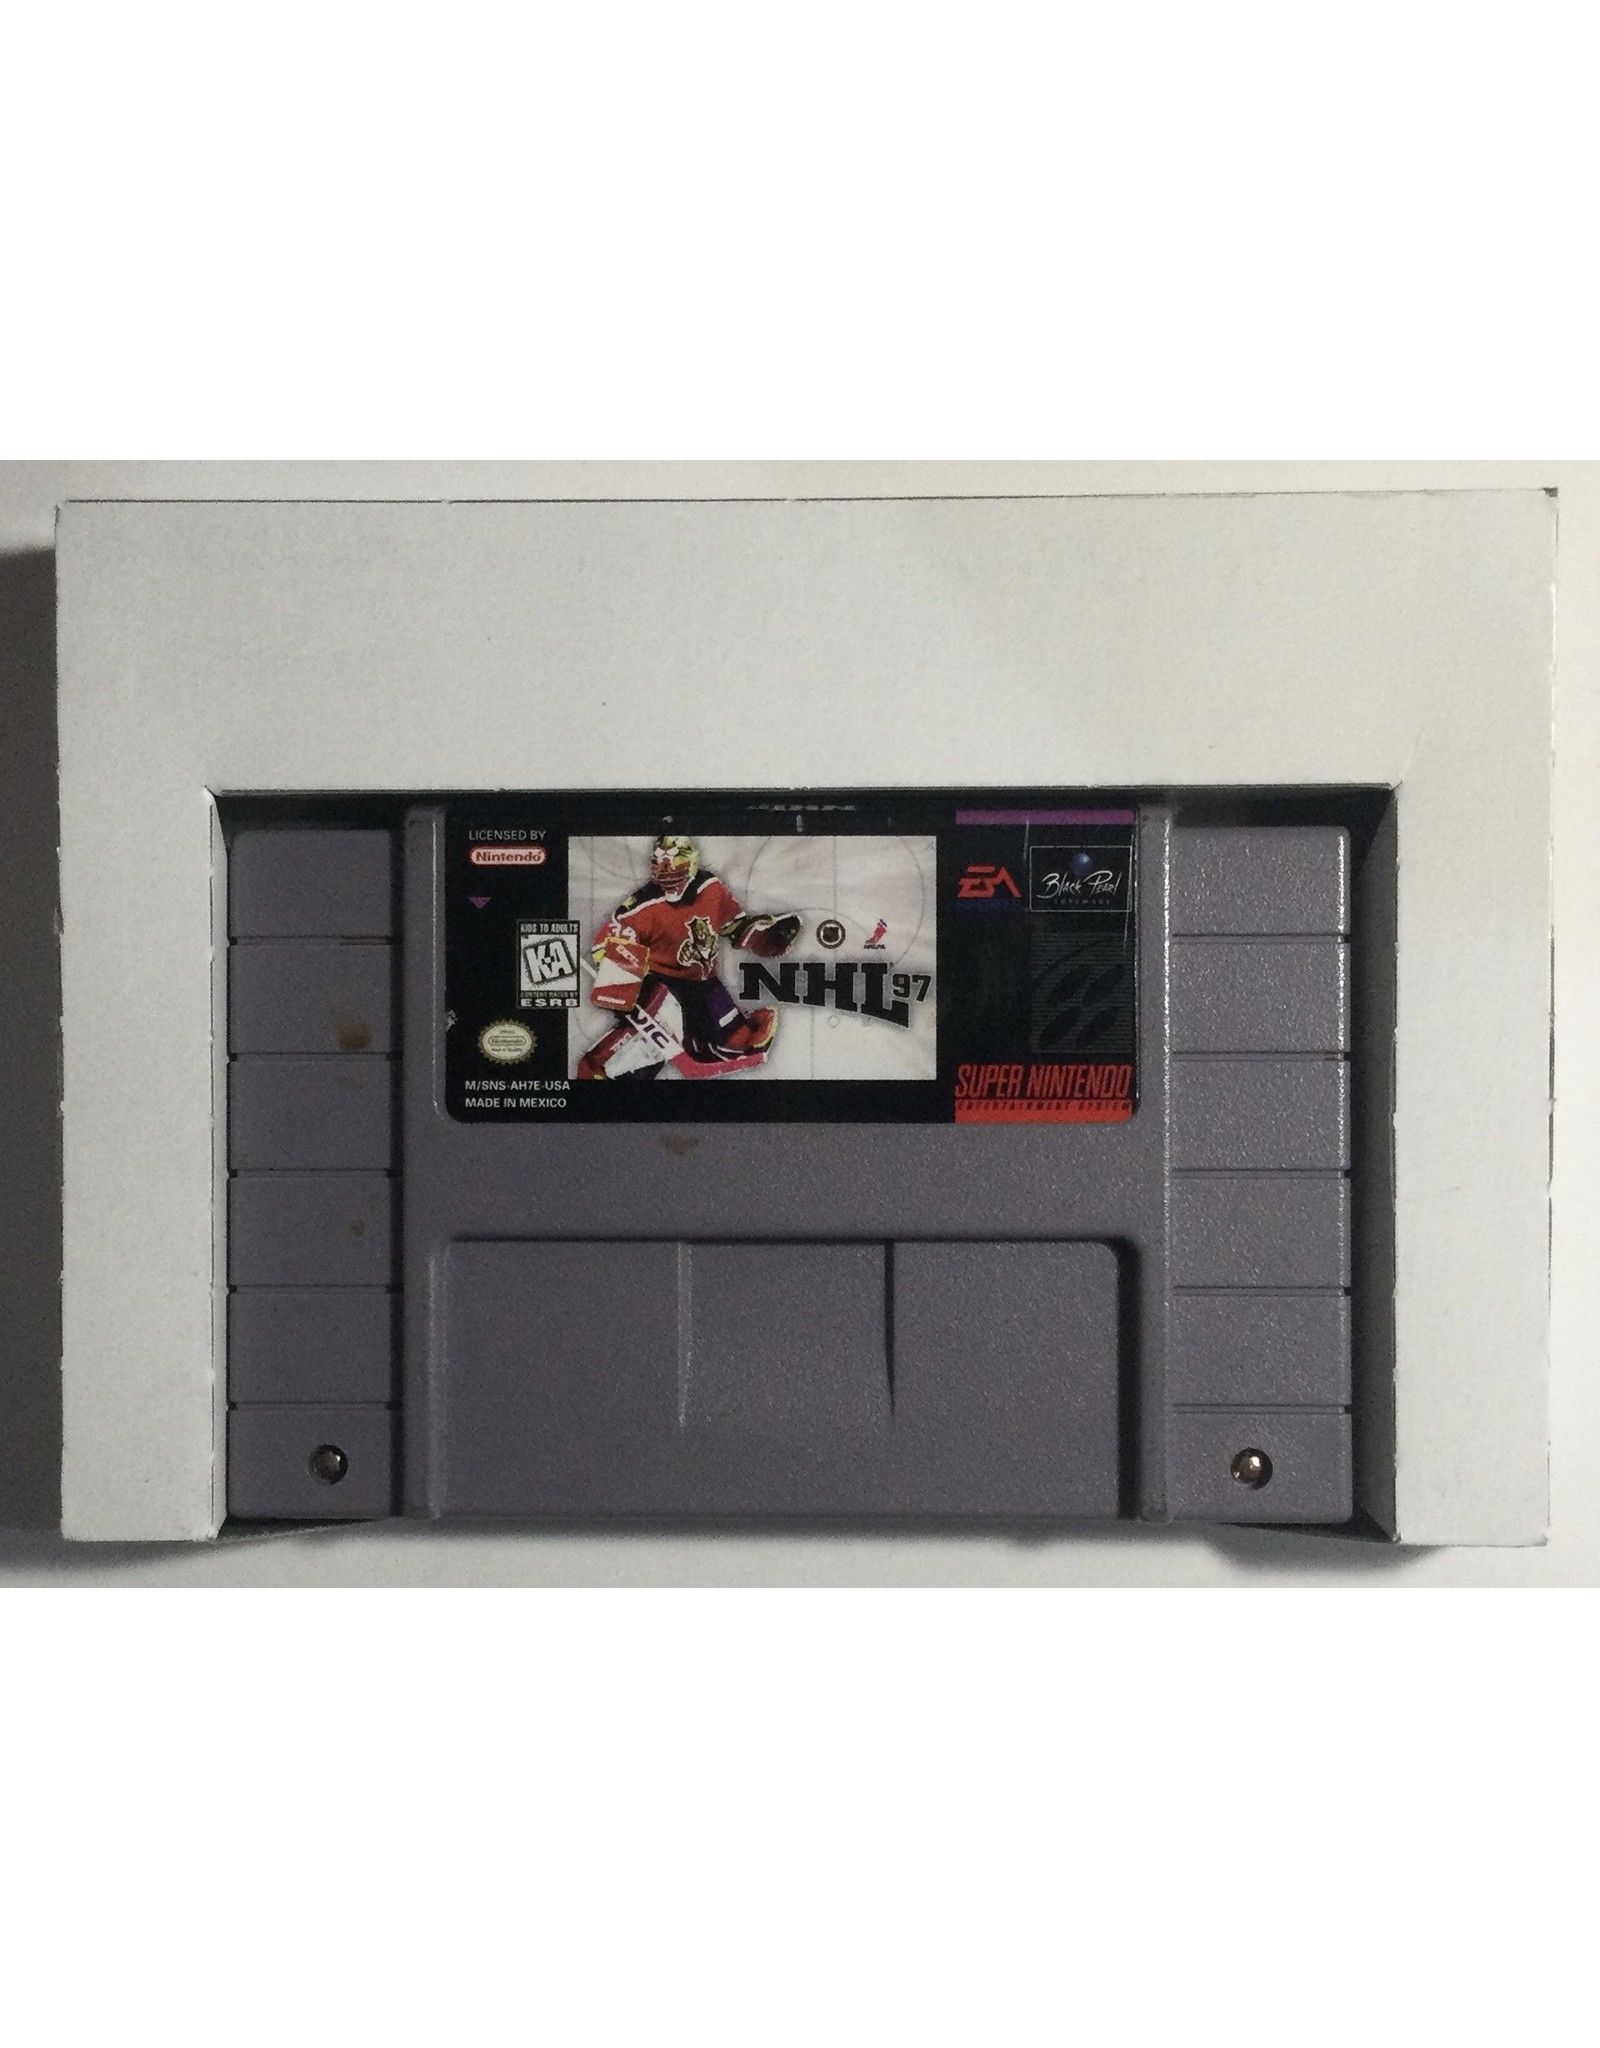 EA SPORTS NHL '97 for Super for Nintendo Entertainment System (SNES) - CIB